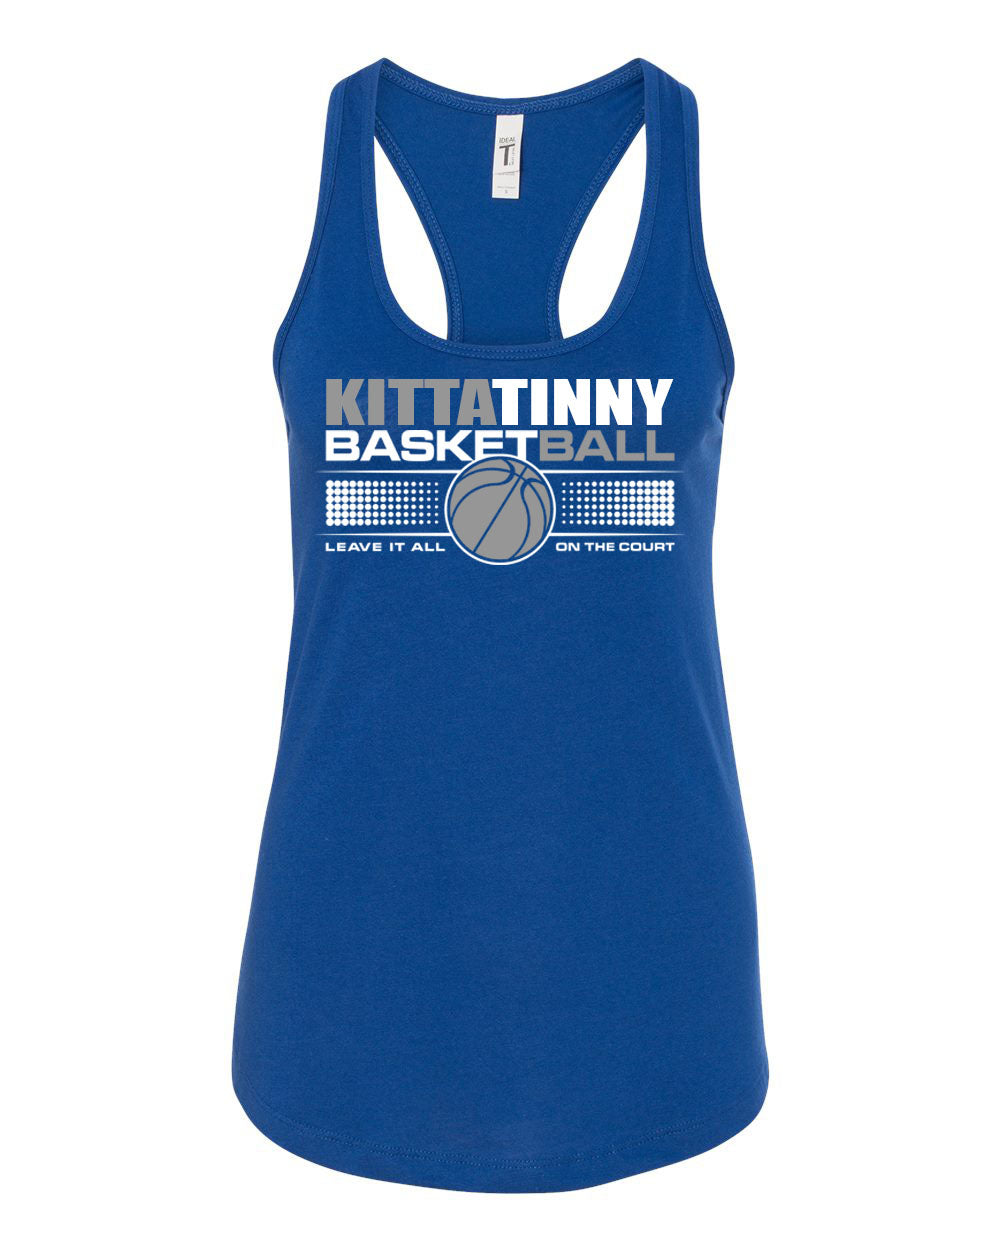 Kittatinny Basketball Design 1 Tank Top